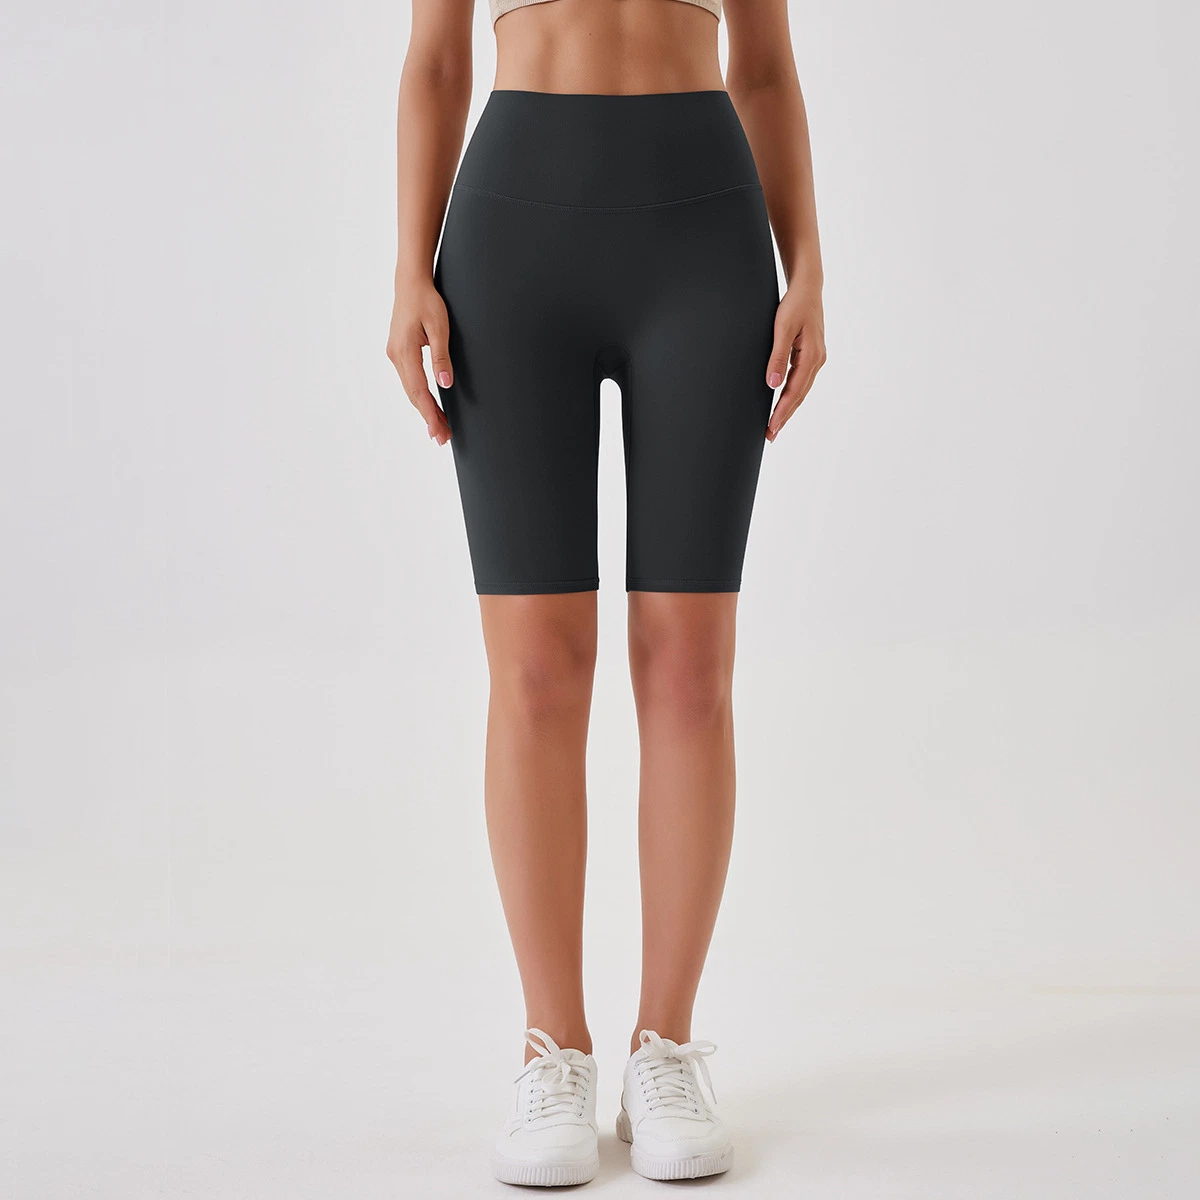 Good Selling Custom Breathable Soft Solid Nylon Sports Fitness High Waist Yoga Shorts Workout Shorts Women Biker Shorts Leggings